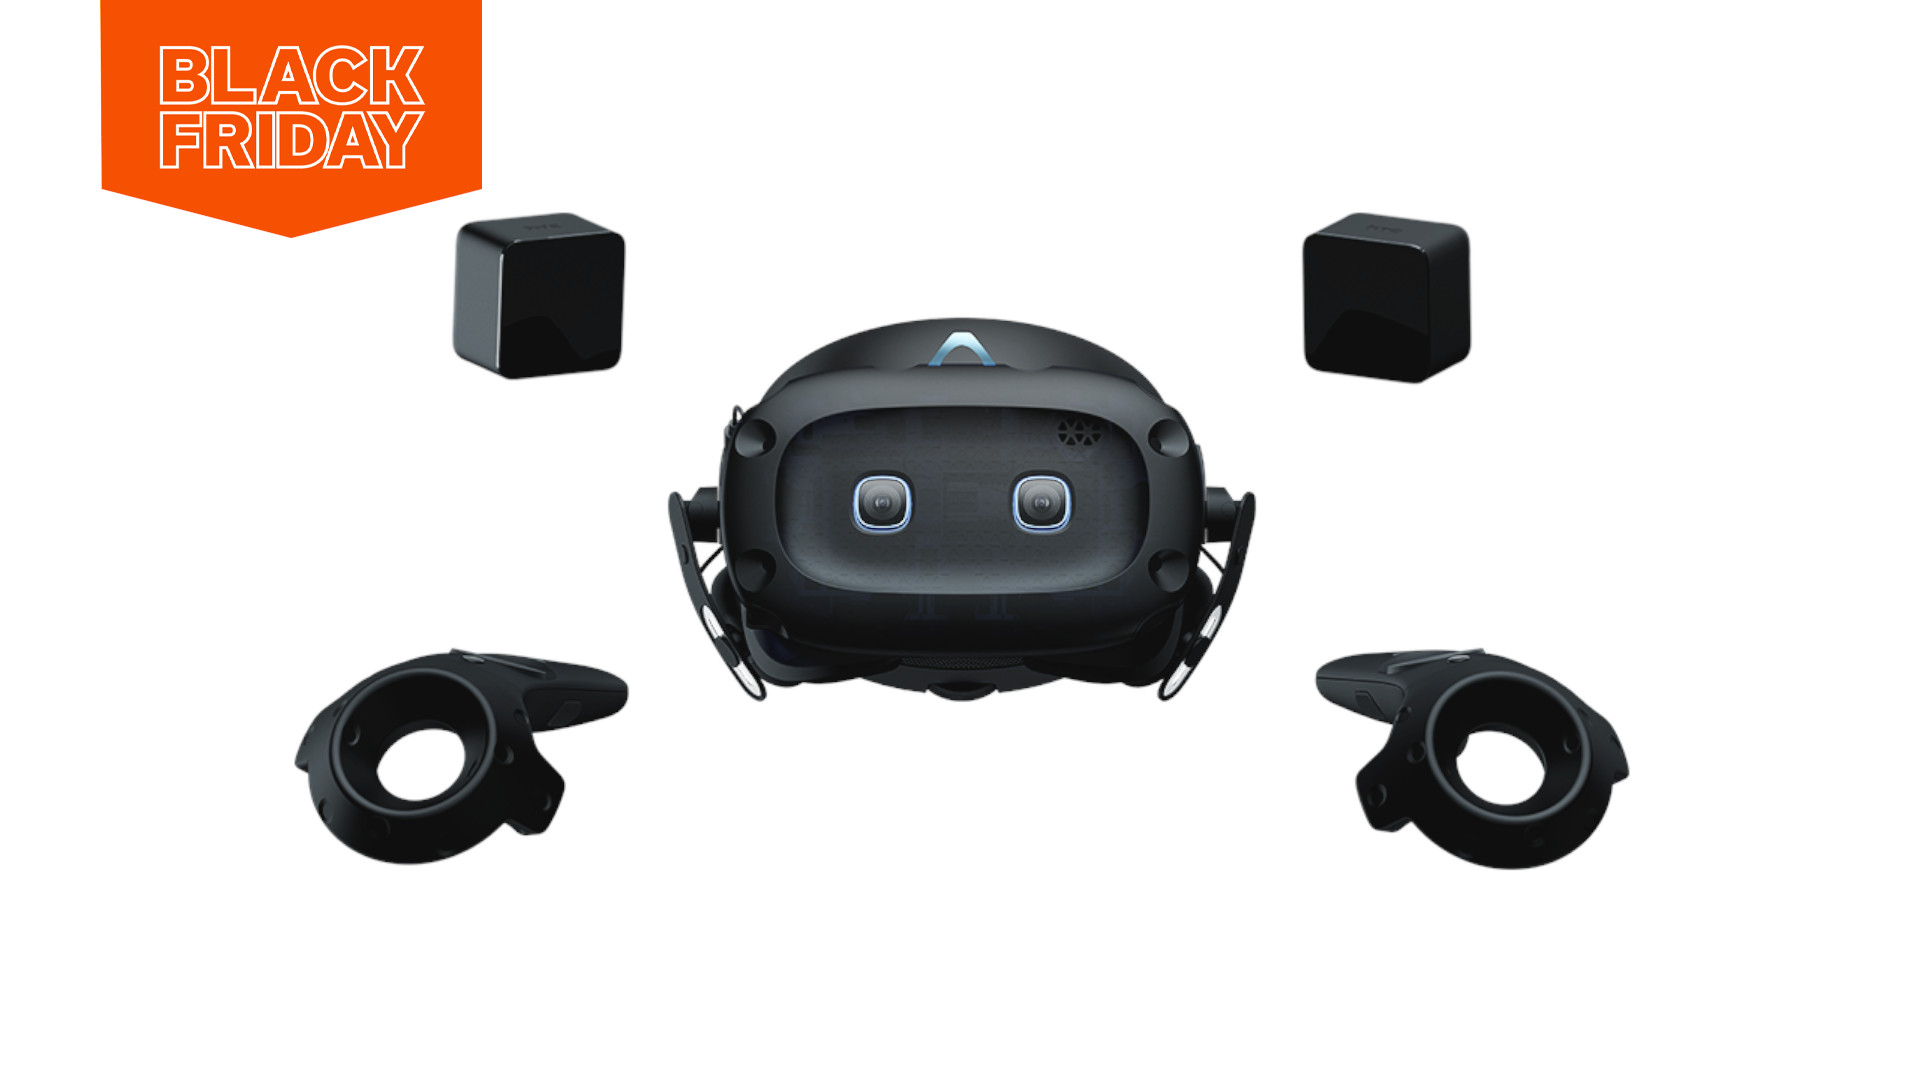 250 Htc Vive Cosmos Elite VR ヘッドセット ブラック フライデー 1 を節約